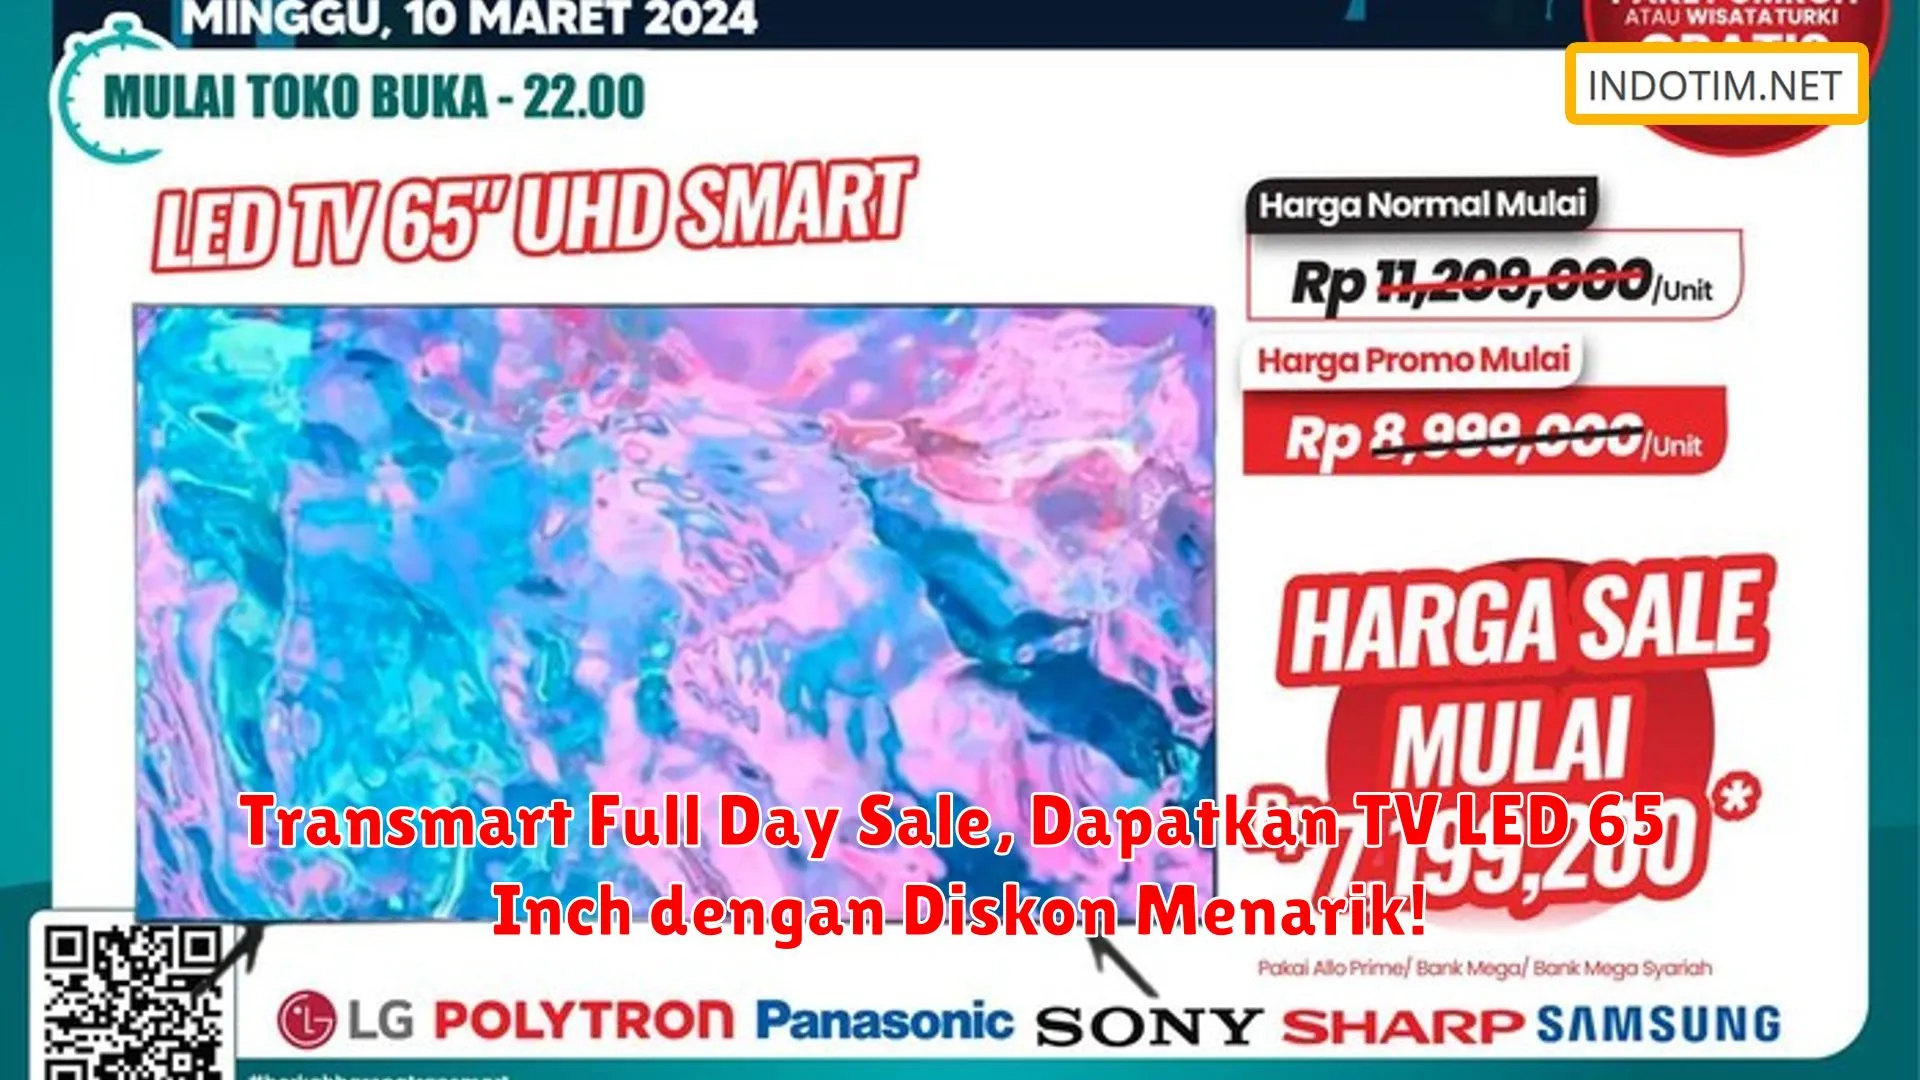 Transmart Full Day Sale, Dapatkan TV LED 65 Inch dengan Diskon Menarik!